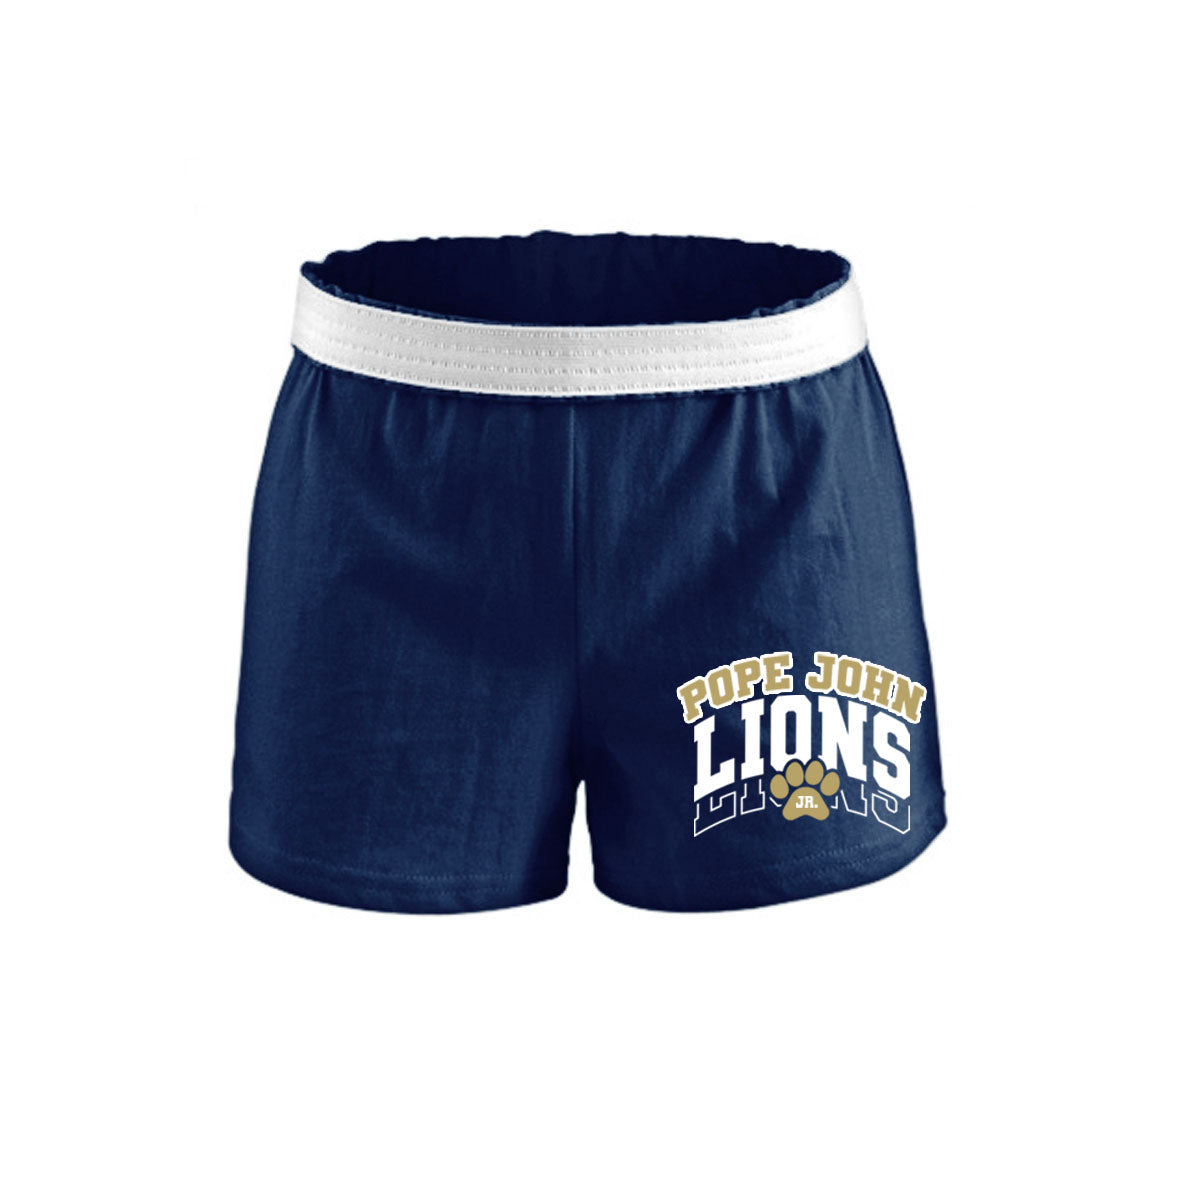 Lions Cheer Design 1 Shorts